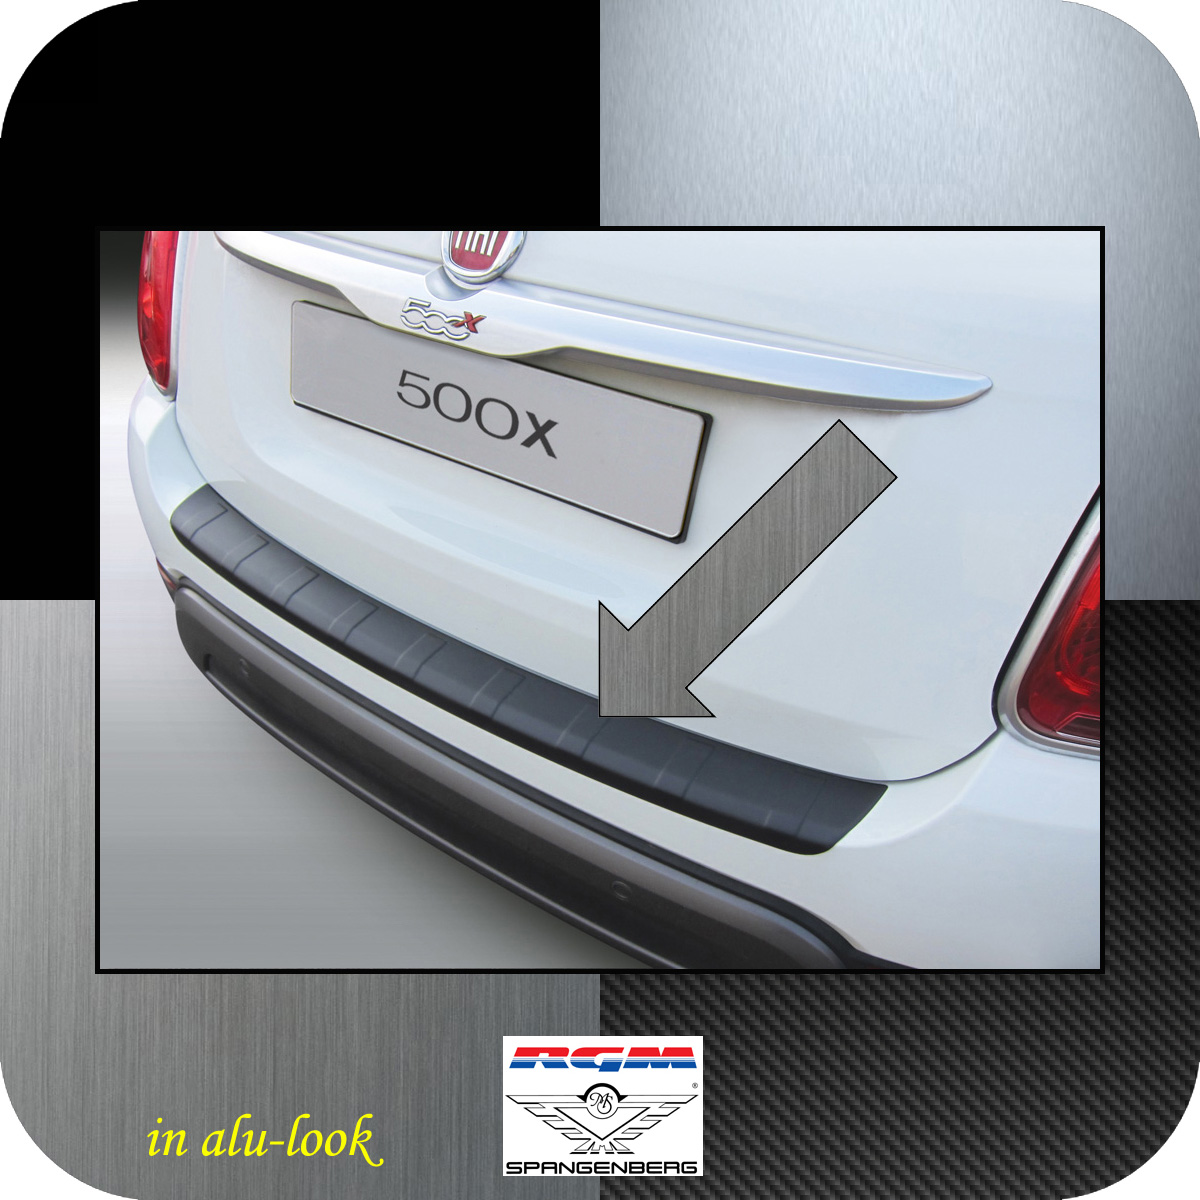 Ladekantenschutz Alu-Look gerippt Fiat 500X Baujahre 2014-2018 3504997